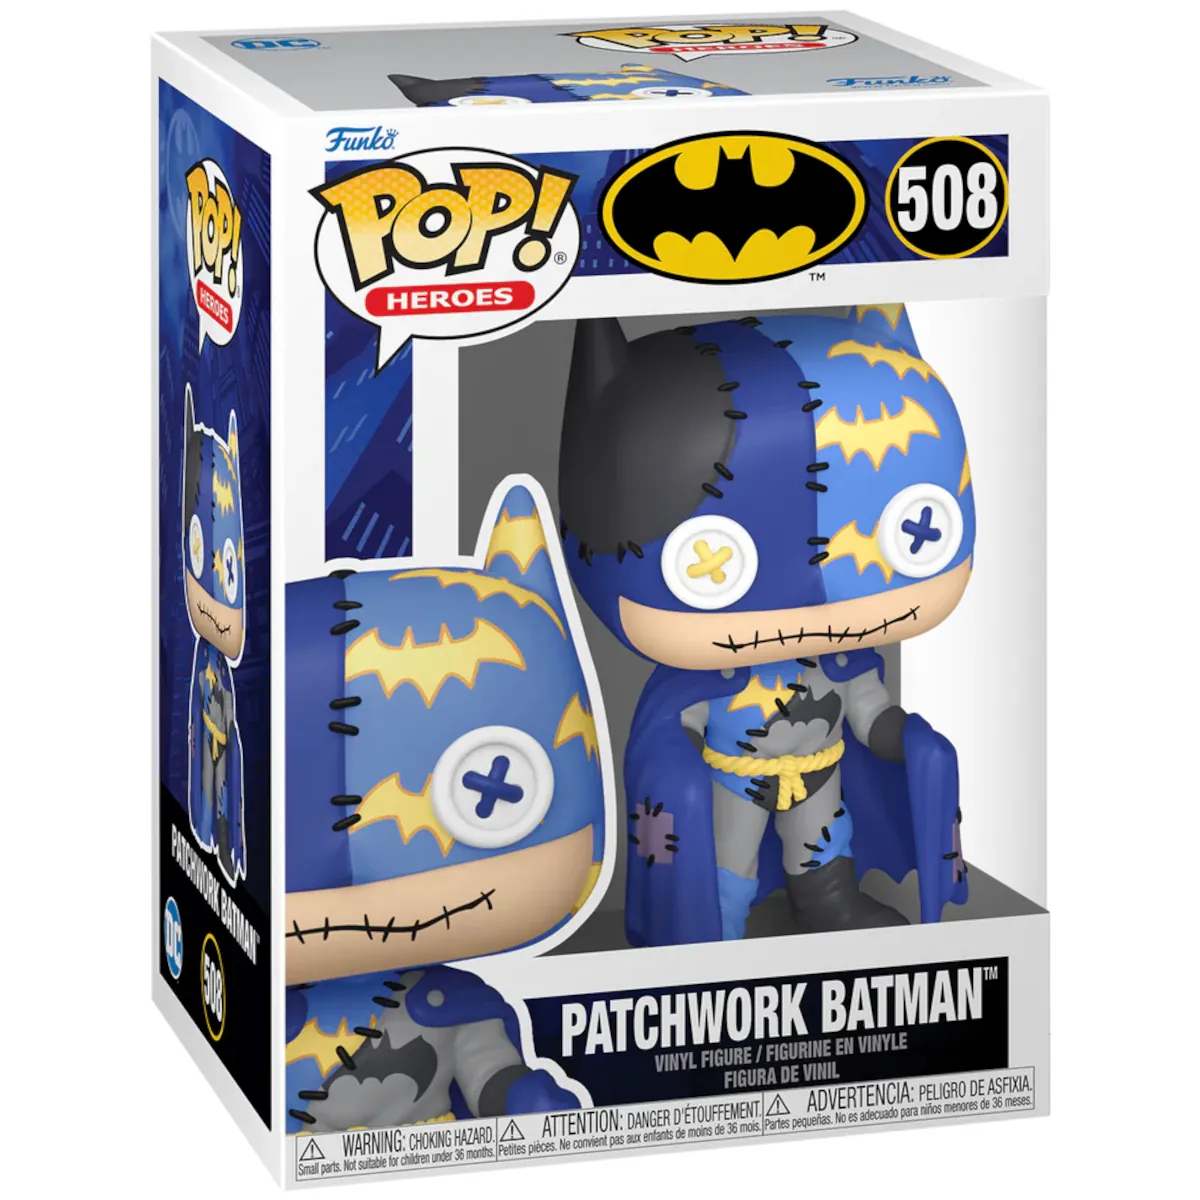 80903 Funko Pop! Heroes - DC Comics Batman - Patchwork Batman Collectable Vinyl Figure Box Front